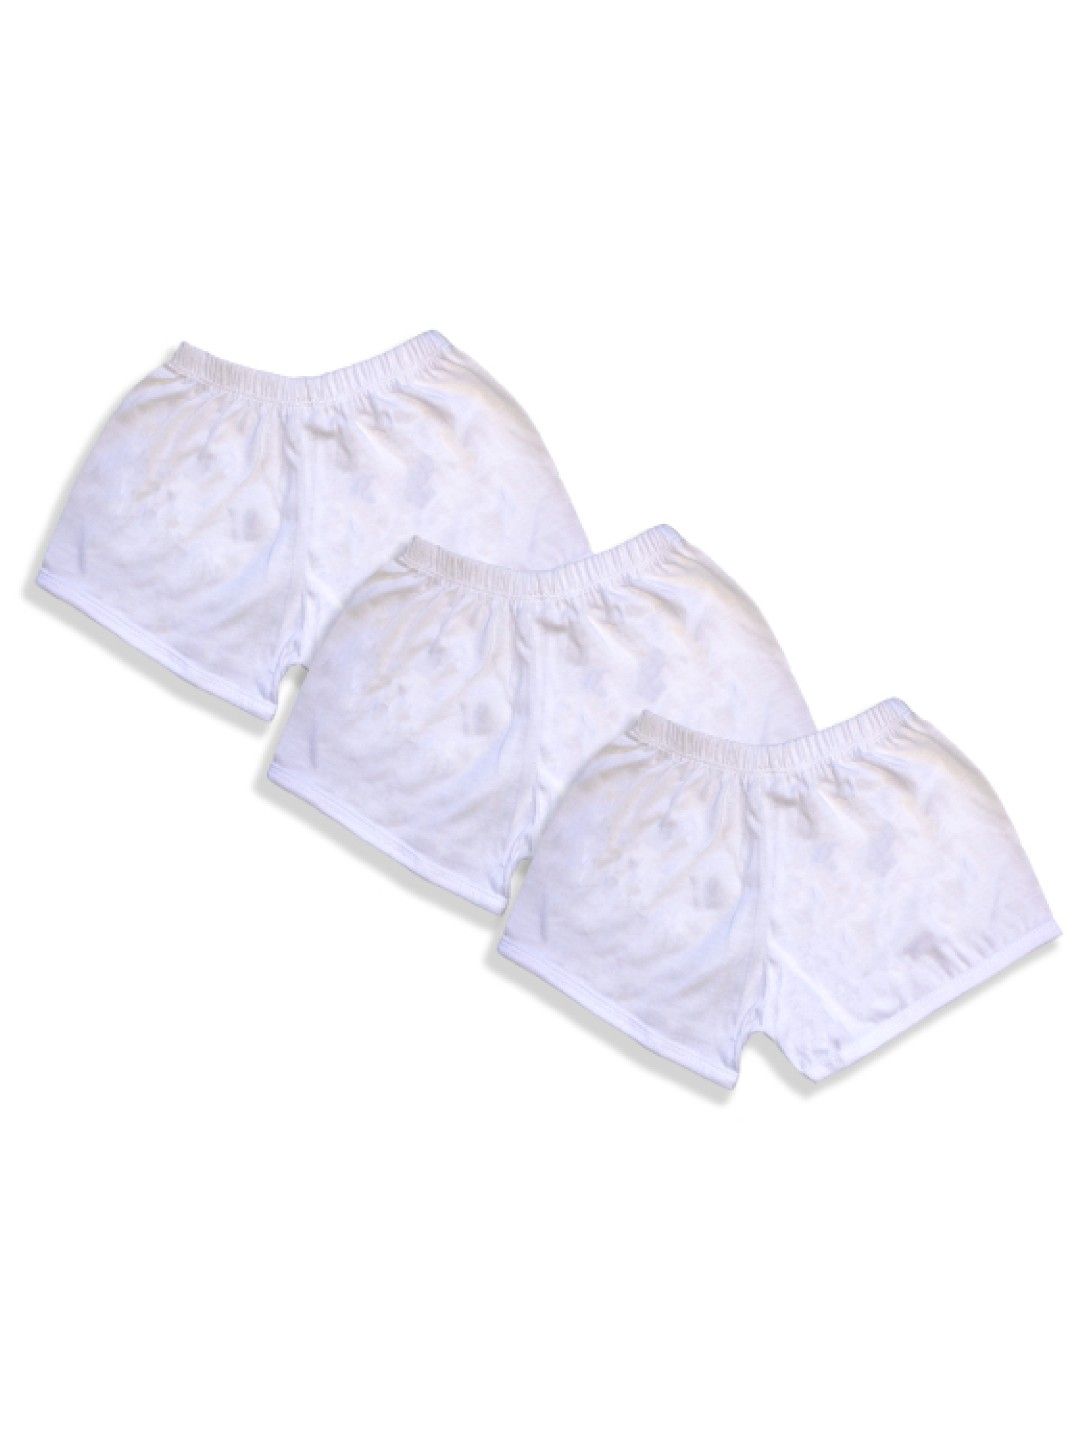 Cottonkind 3-Piece Pantylet Innerwear